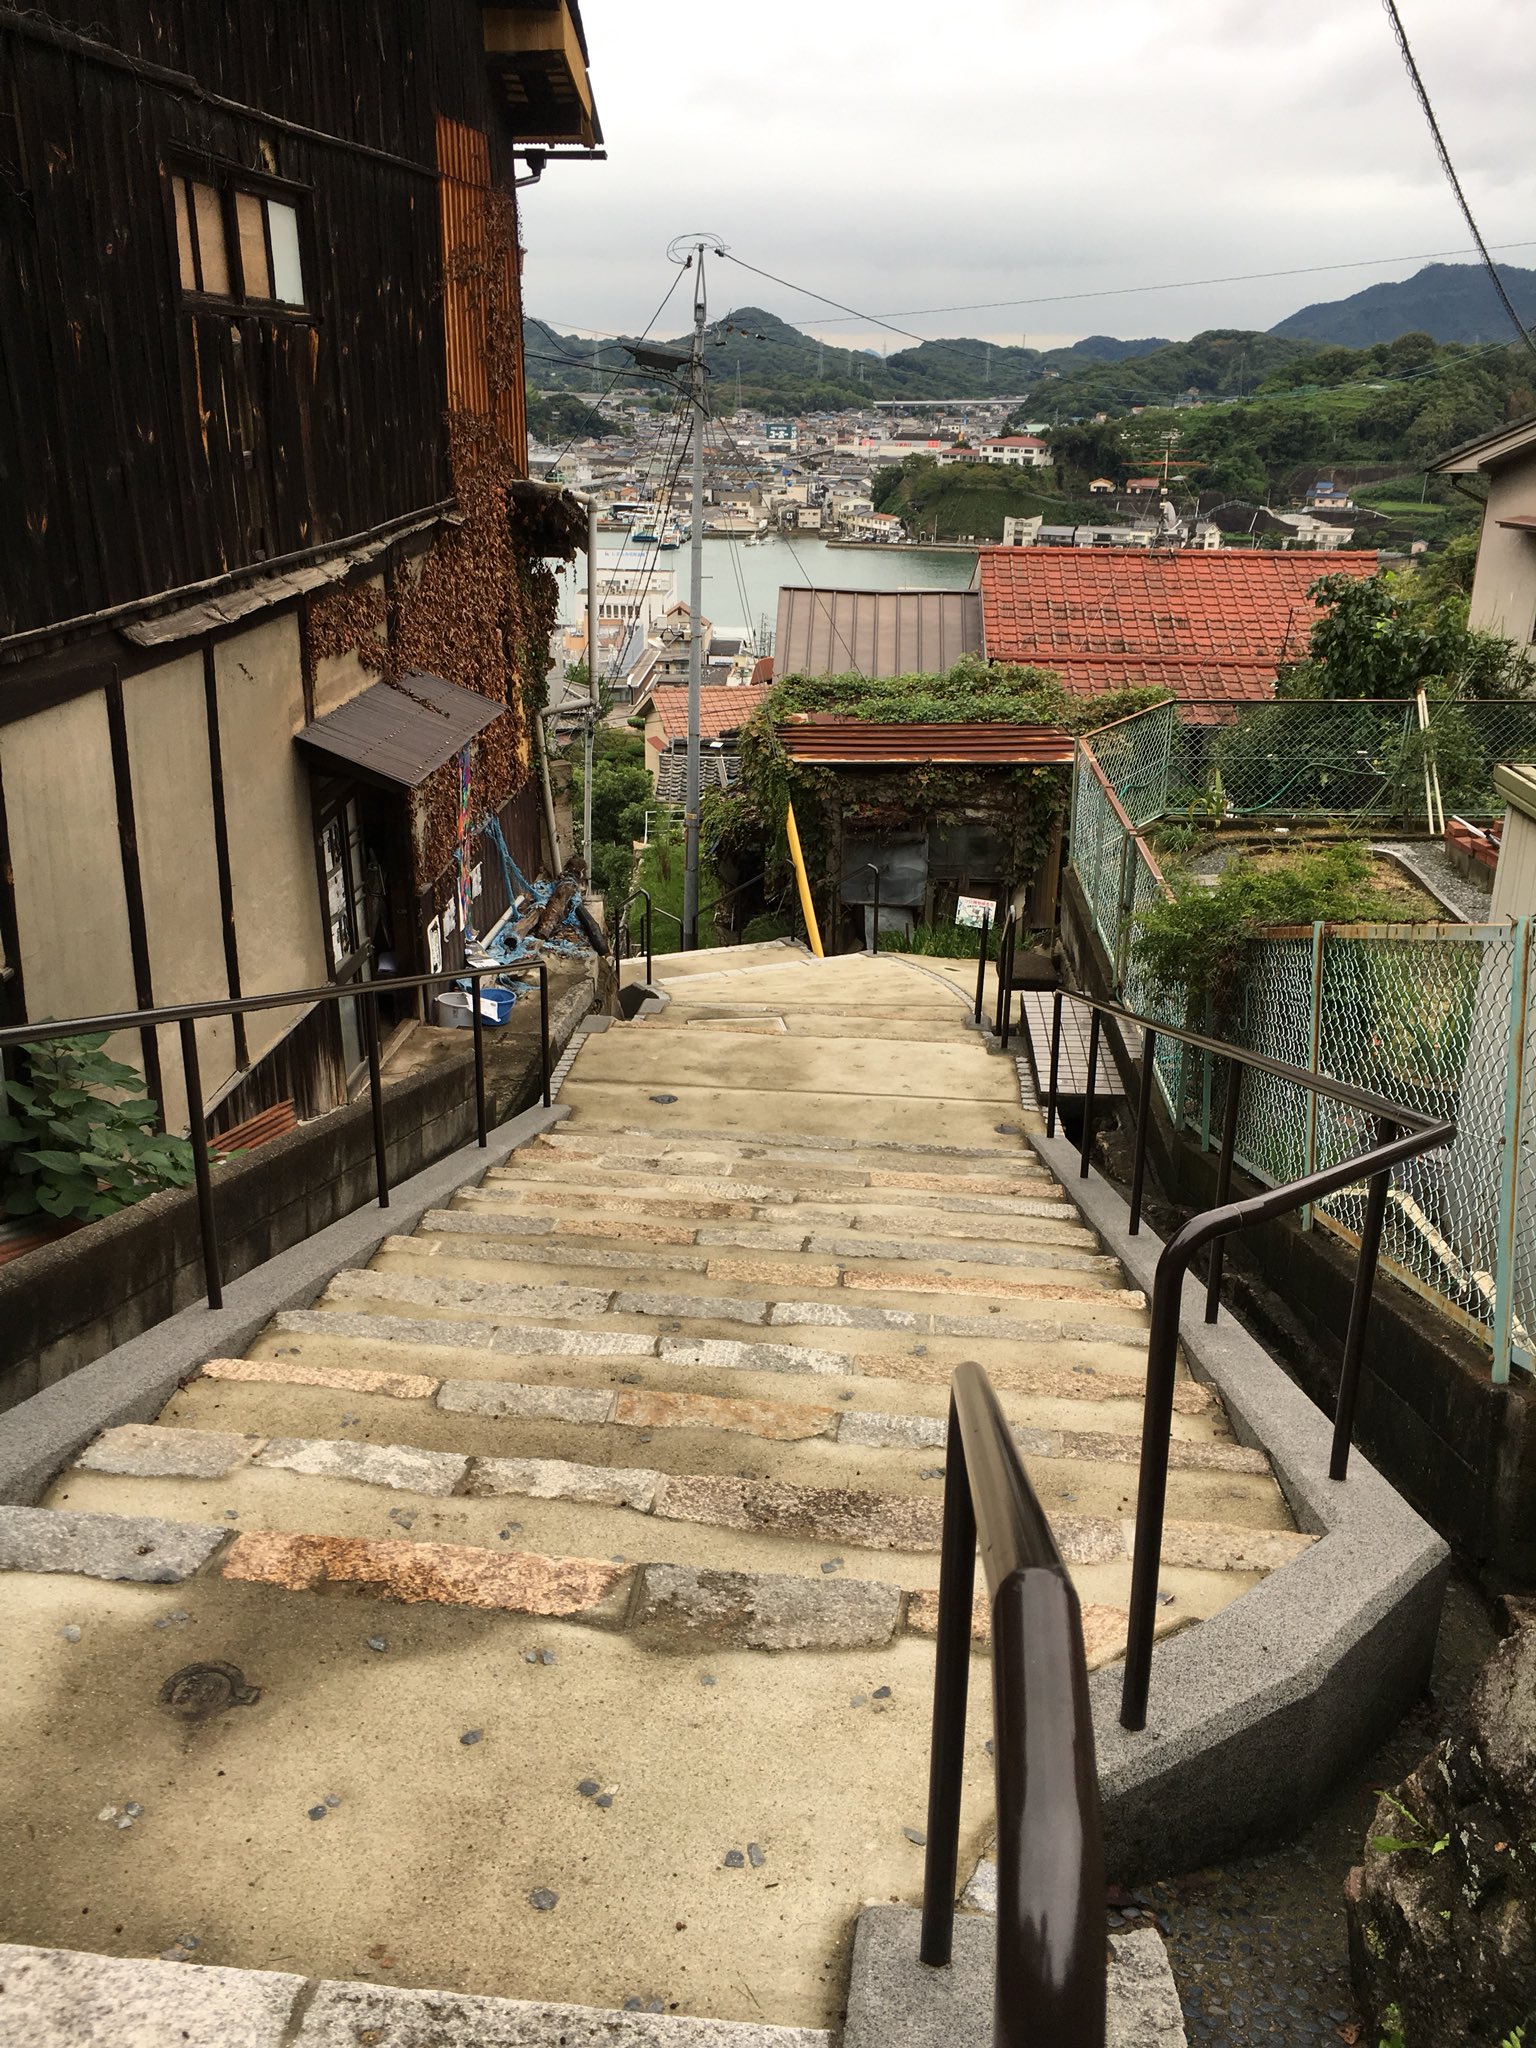 Kura Iphoneのヘルスケアアプリで 五合目から富士山登った時は50階ぶん階段 を上がったと計測されて 高尾山のときは60階ぶん 昨日 尾道を半日歩いたら72階ぶん さすが坂と階段の街